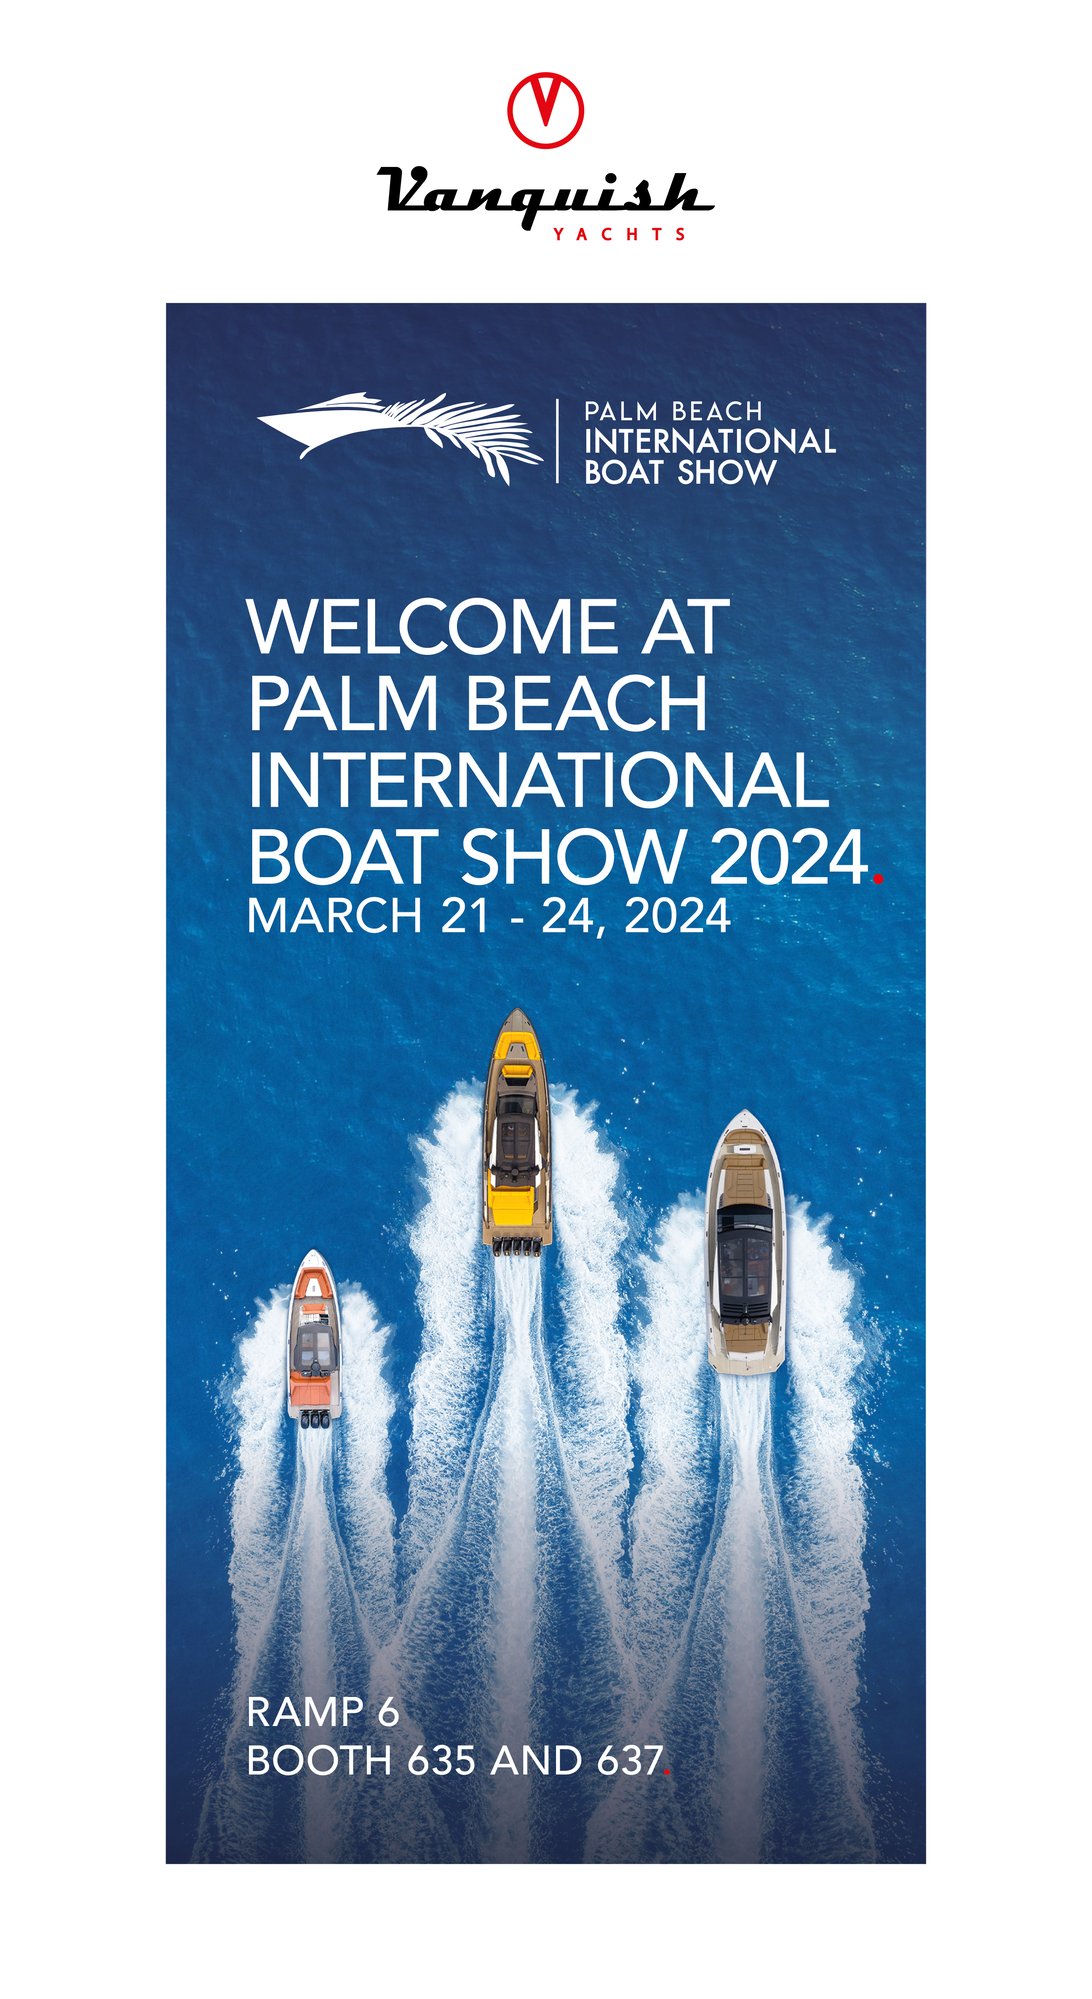 Vanquish Yachts - Palm Beach International Boat Show 2024 - e-mailing - Header